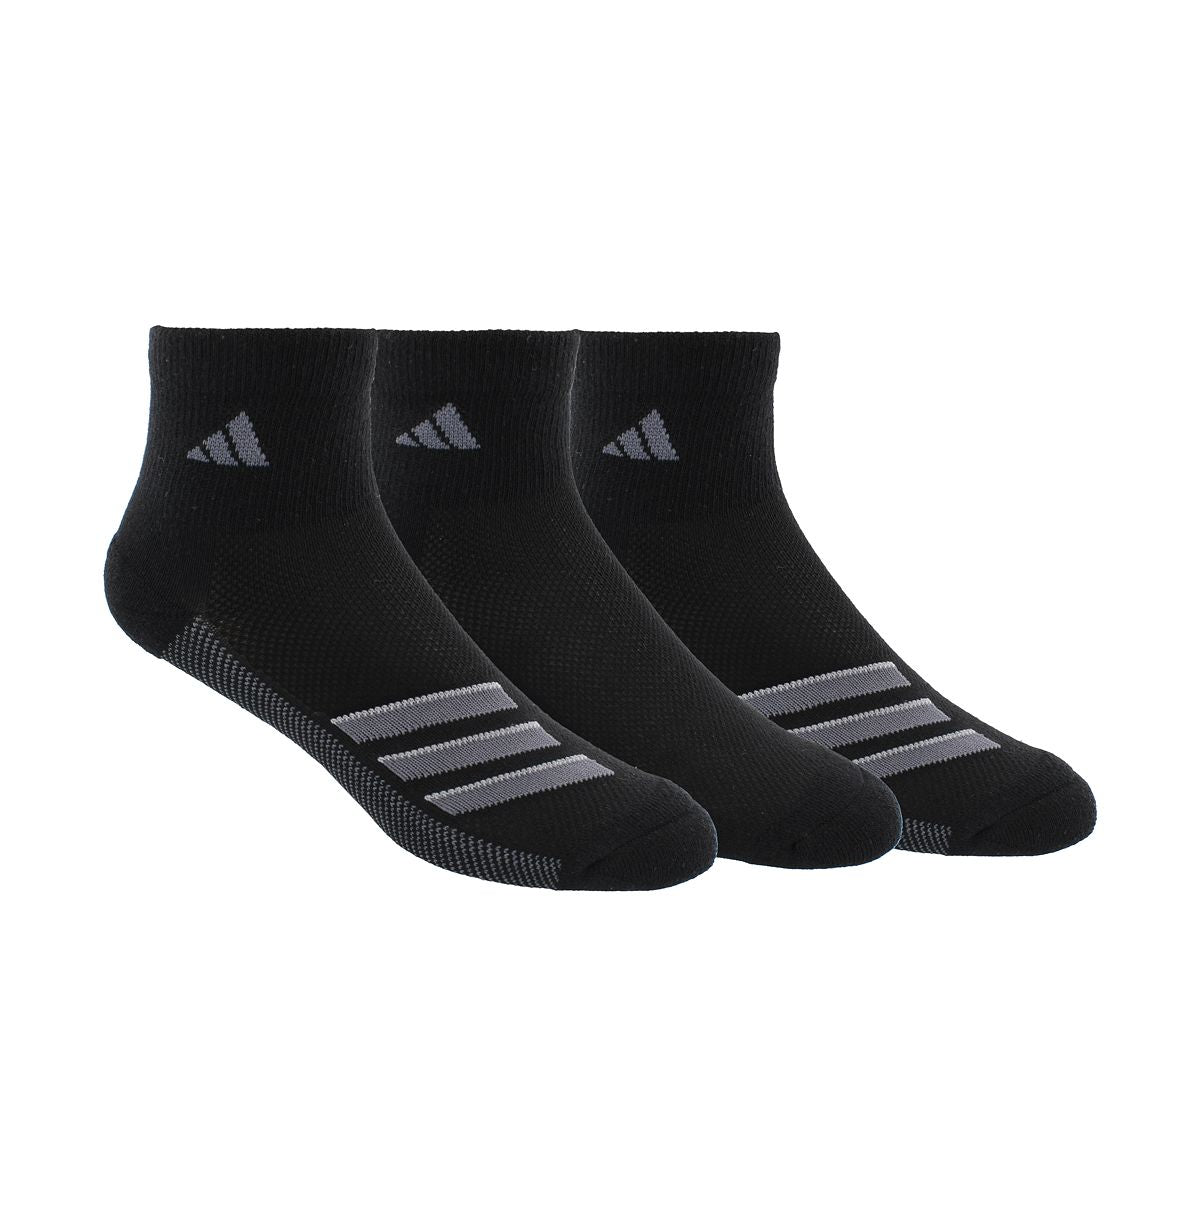 Adidas 3-pk. Superlite Quarter Socks Black/ Onix/ Light Onix